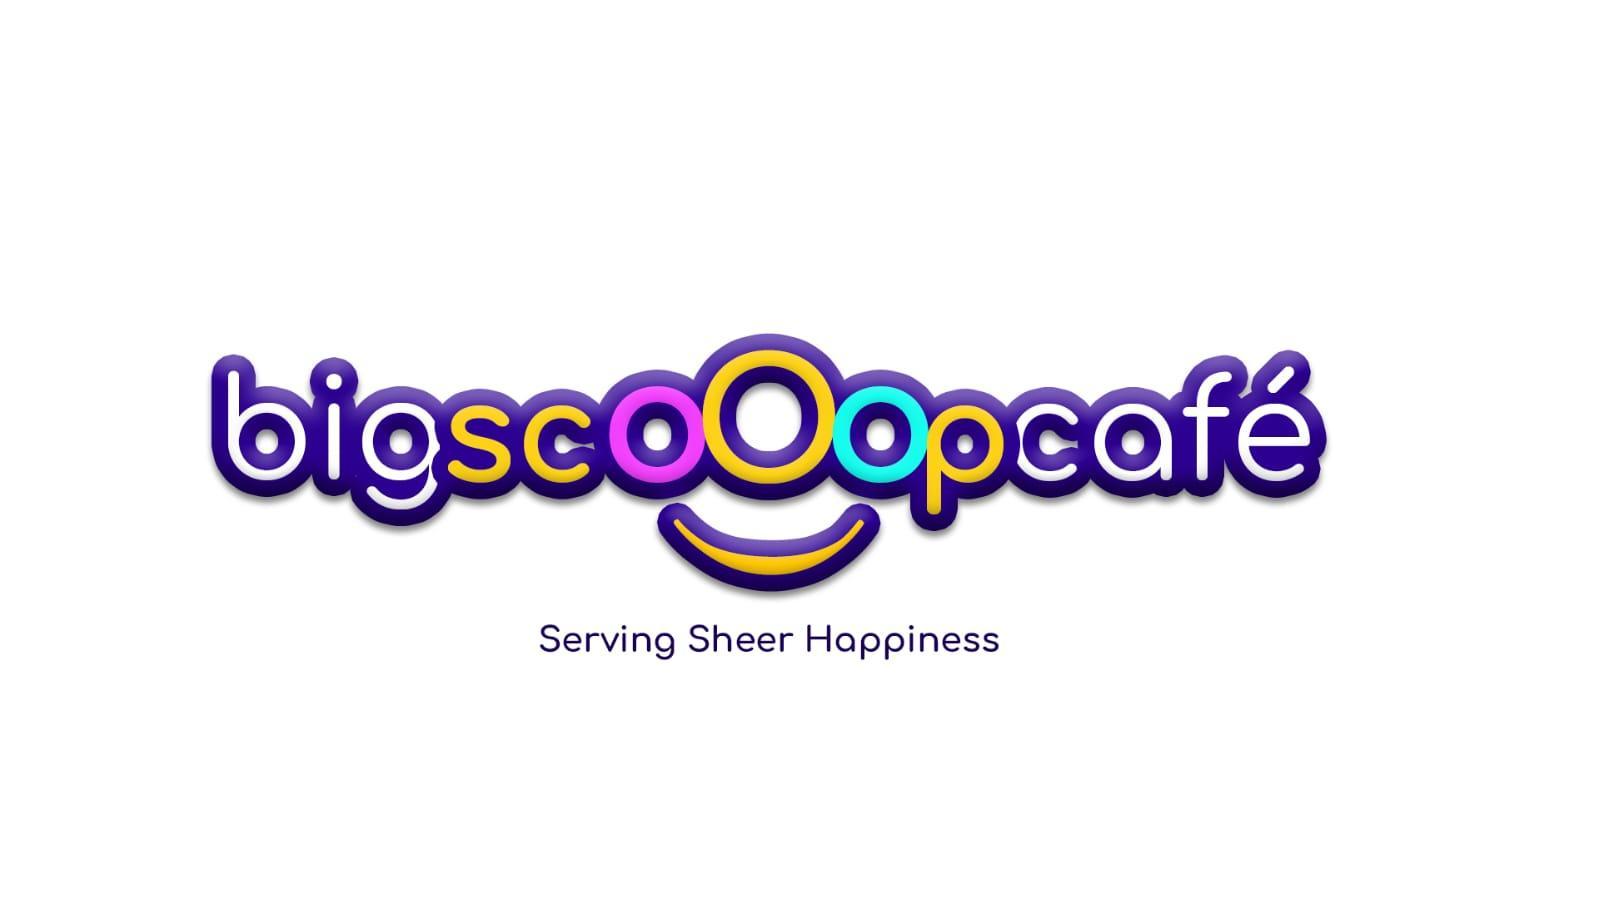 Big scoop cafe - C G Road